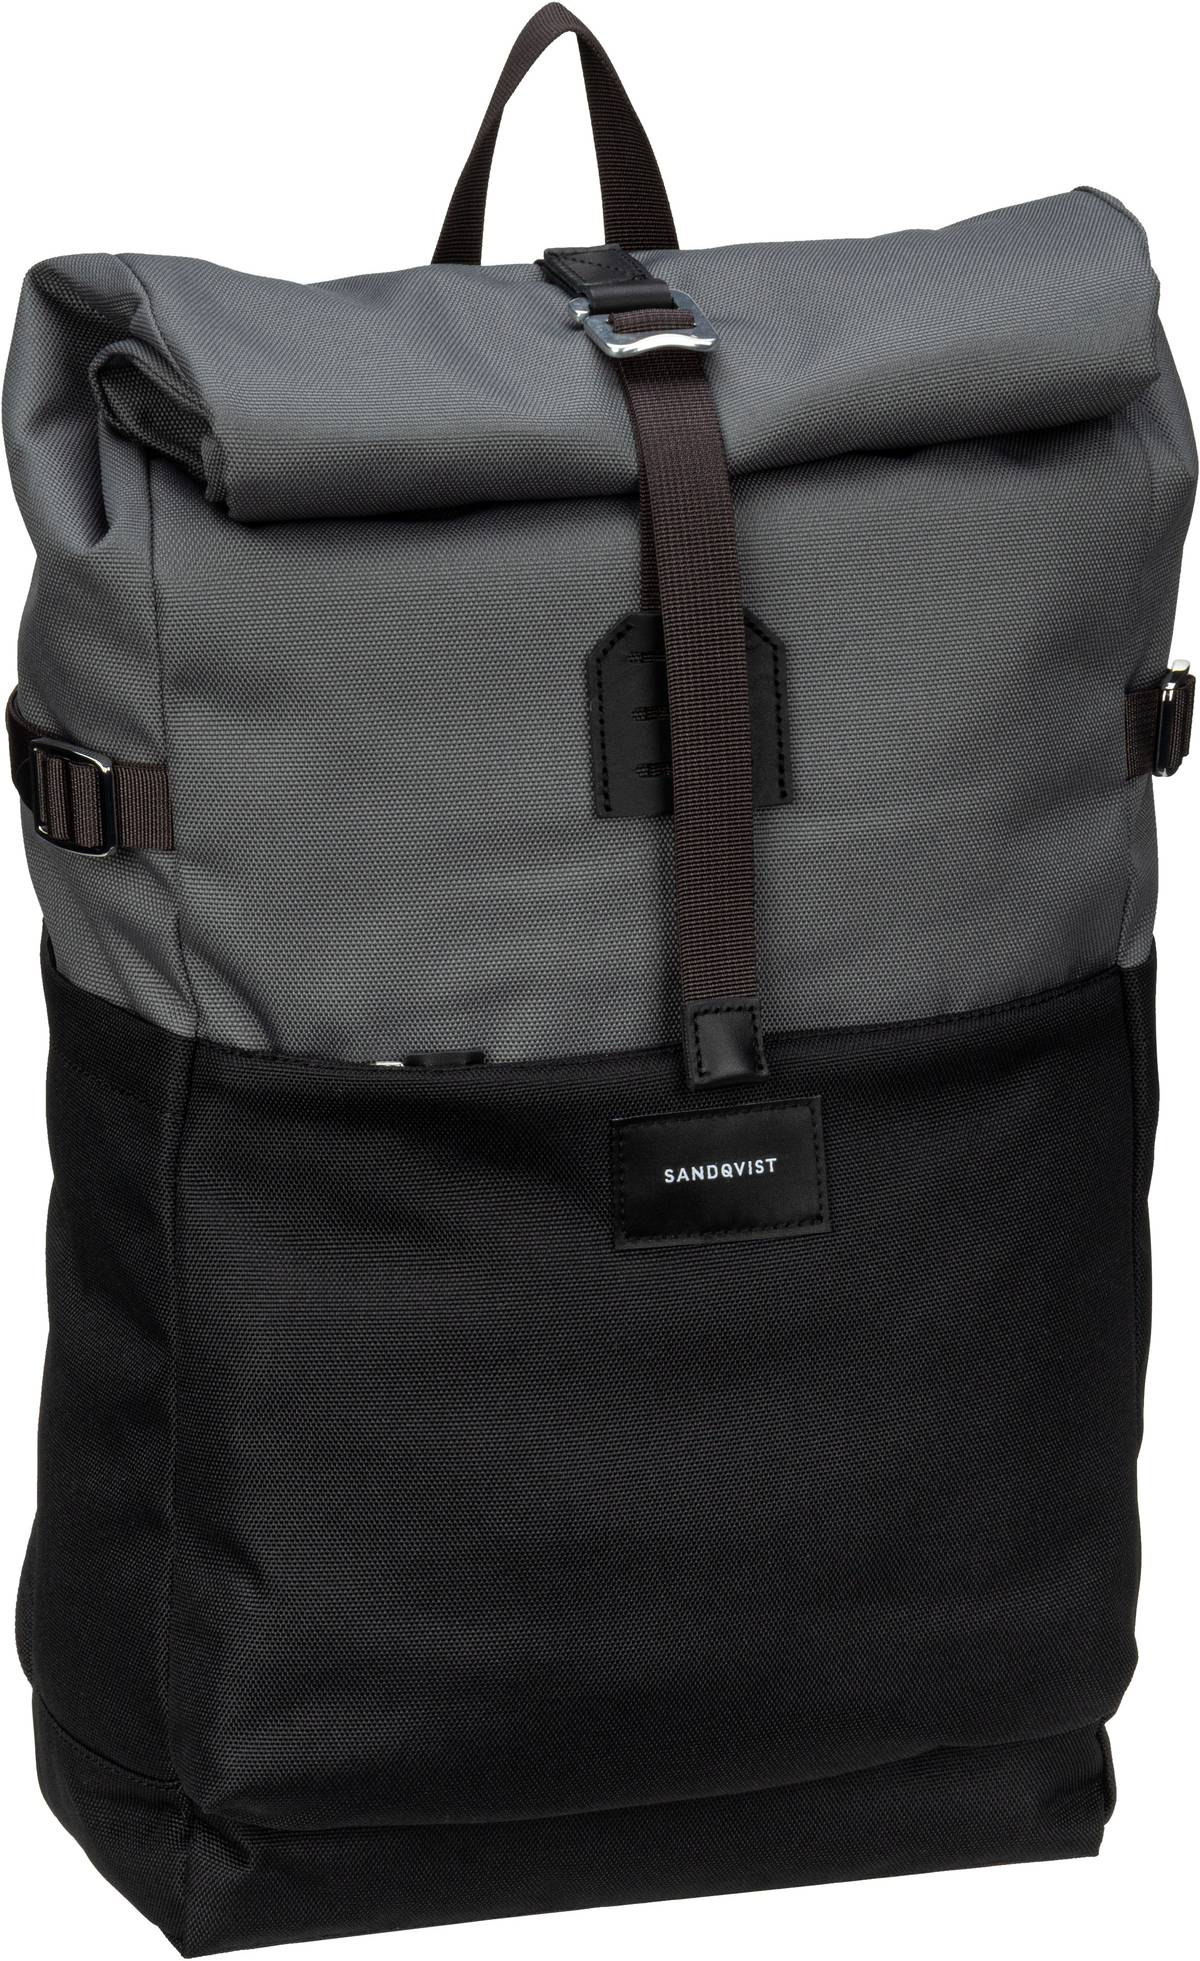 Sandqvist Sandqvist Ilon Rolltop Backpack in Multi Dark (11.5 Liter), Rucksack / Backpack